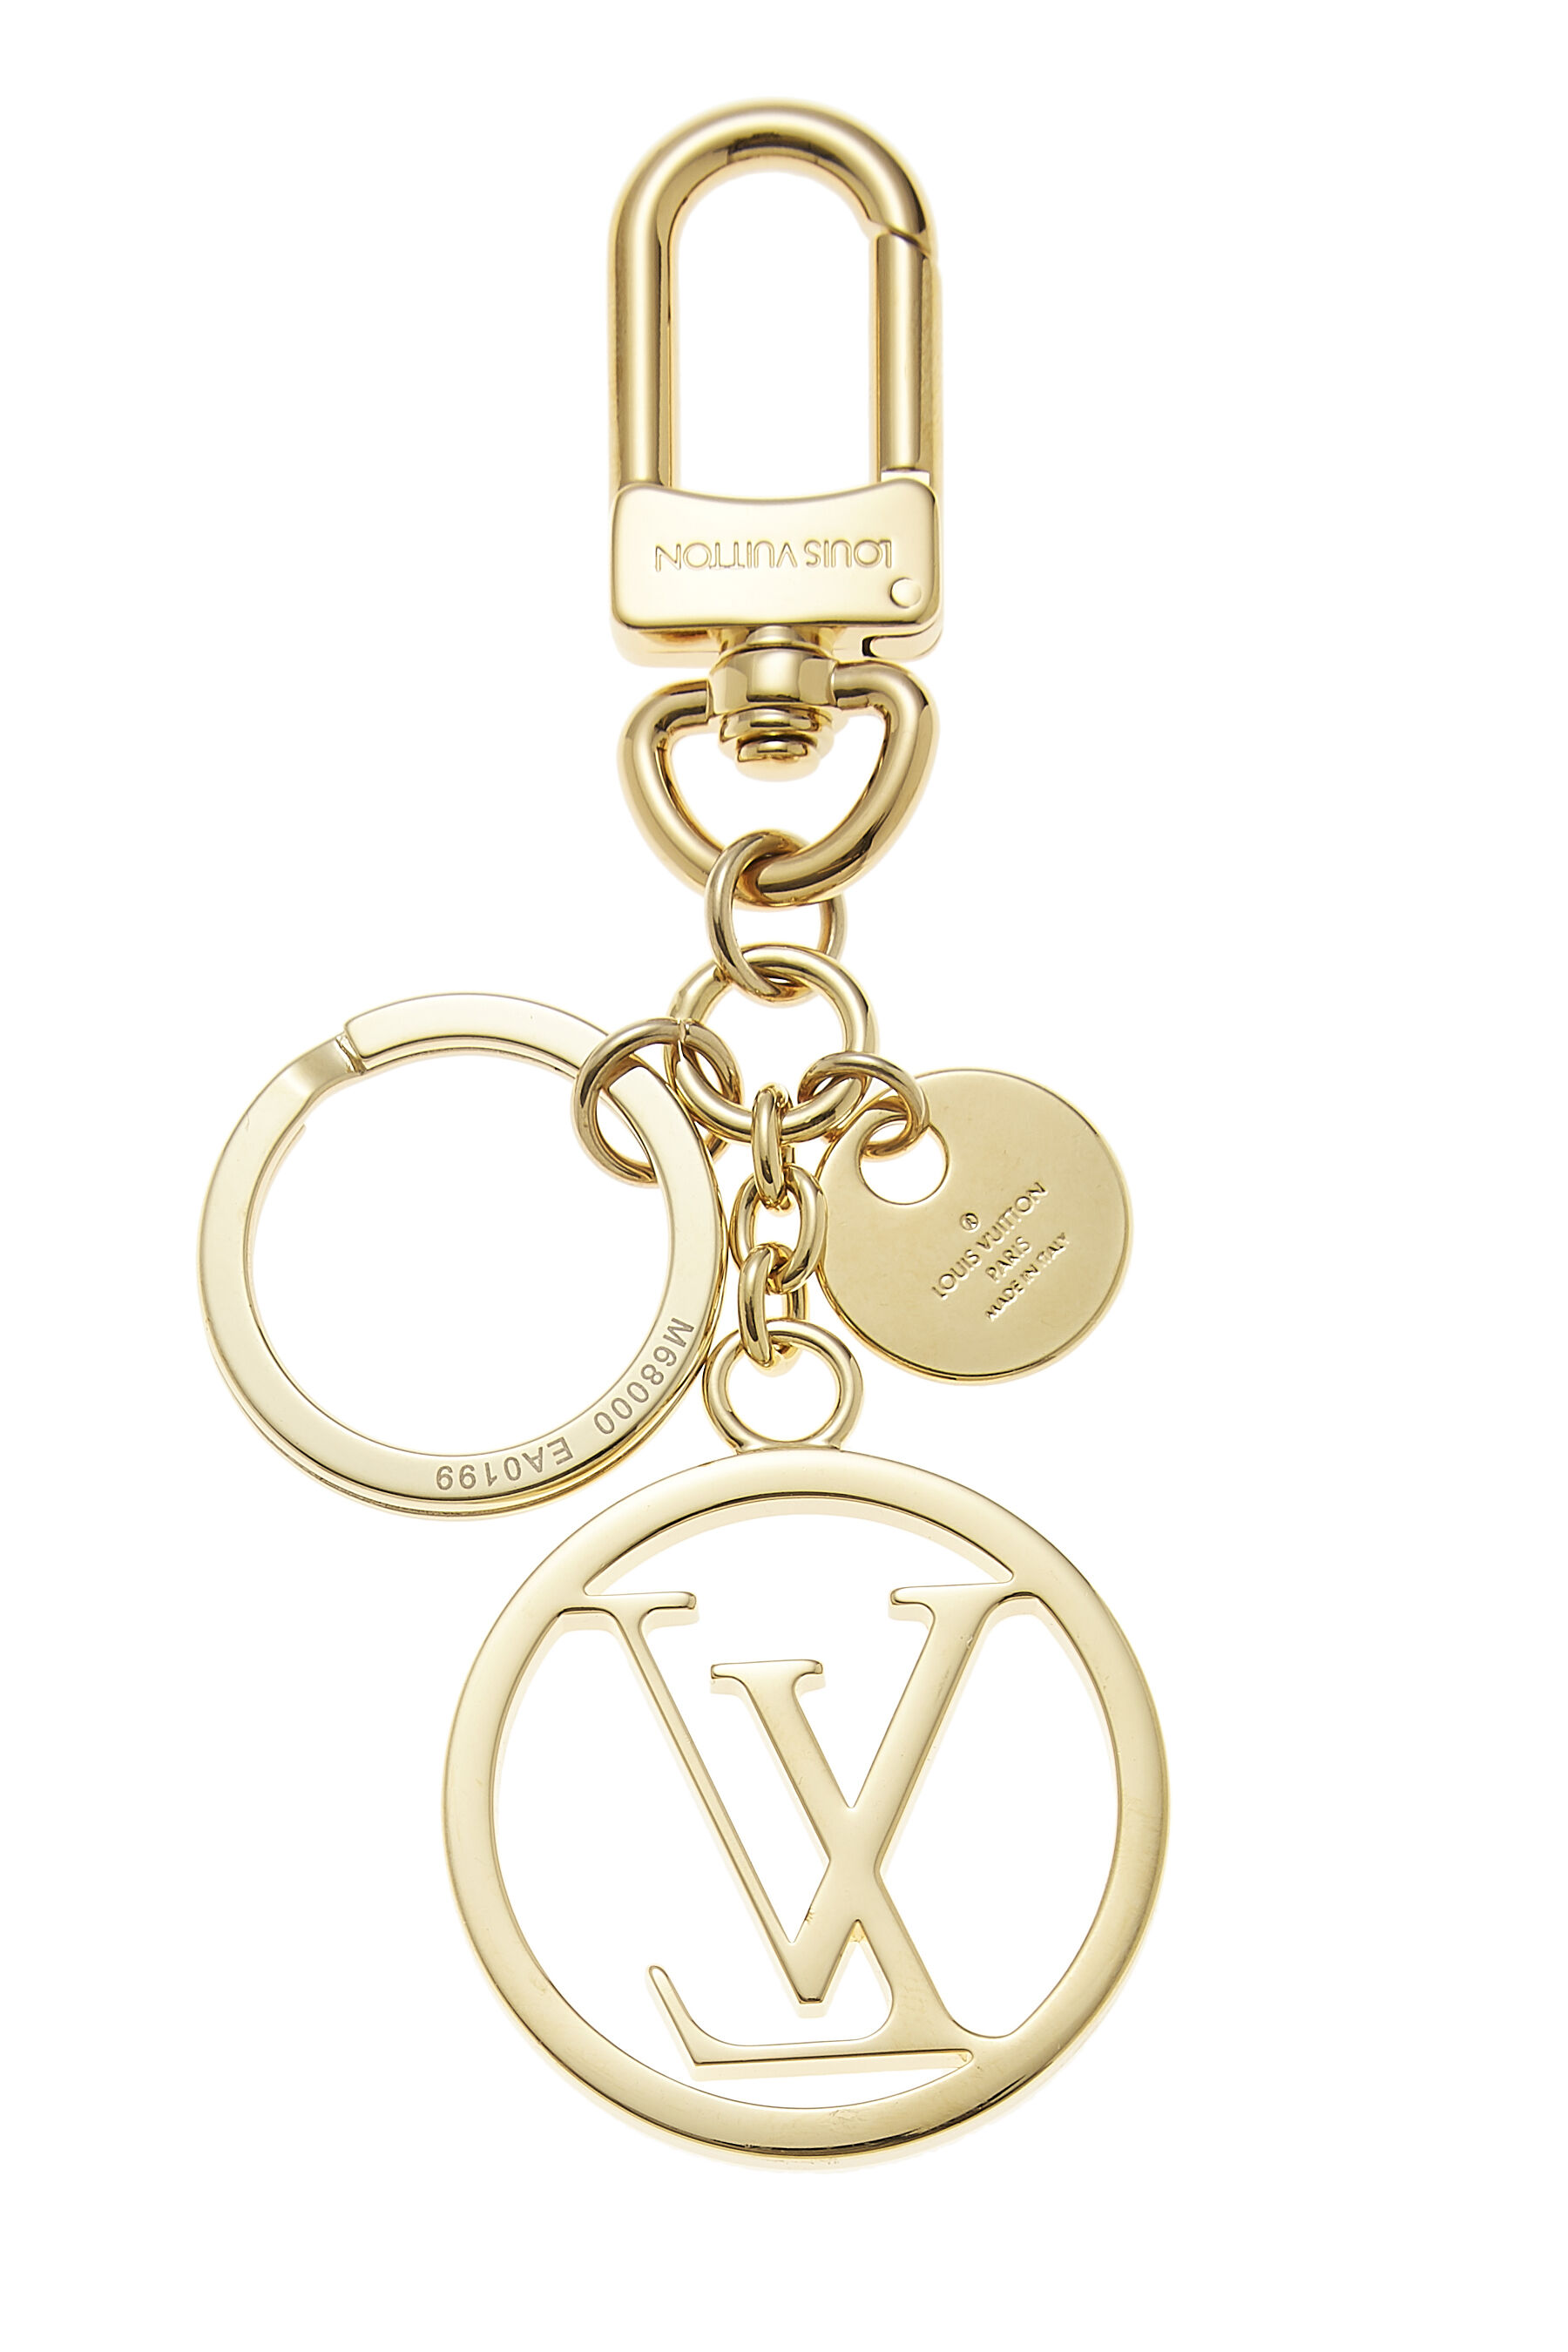 LOUIS VUITTON Louis Vuitton bag charm LV circle key holder M68000